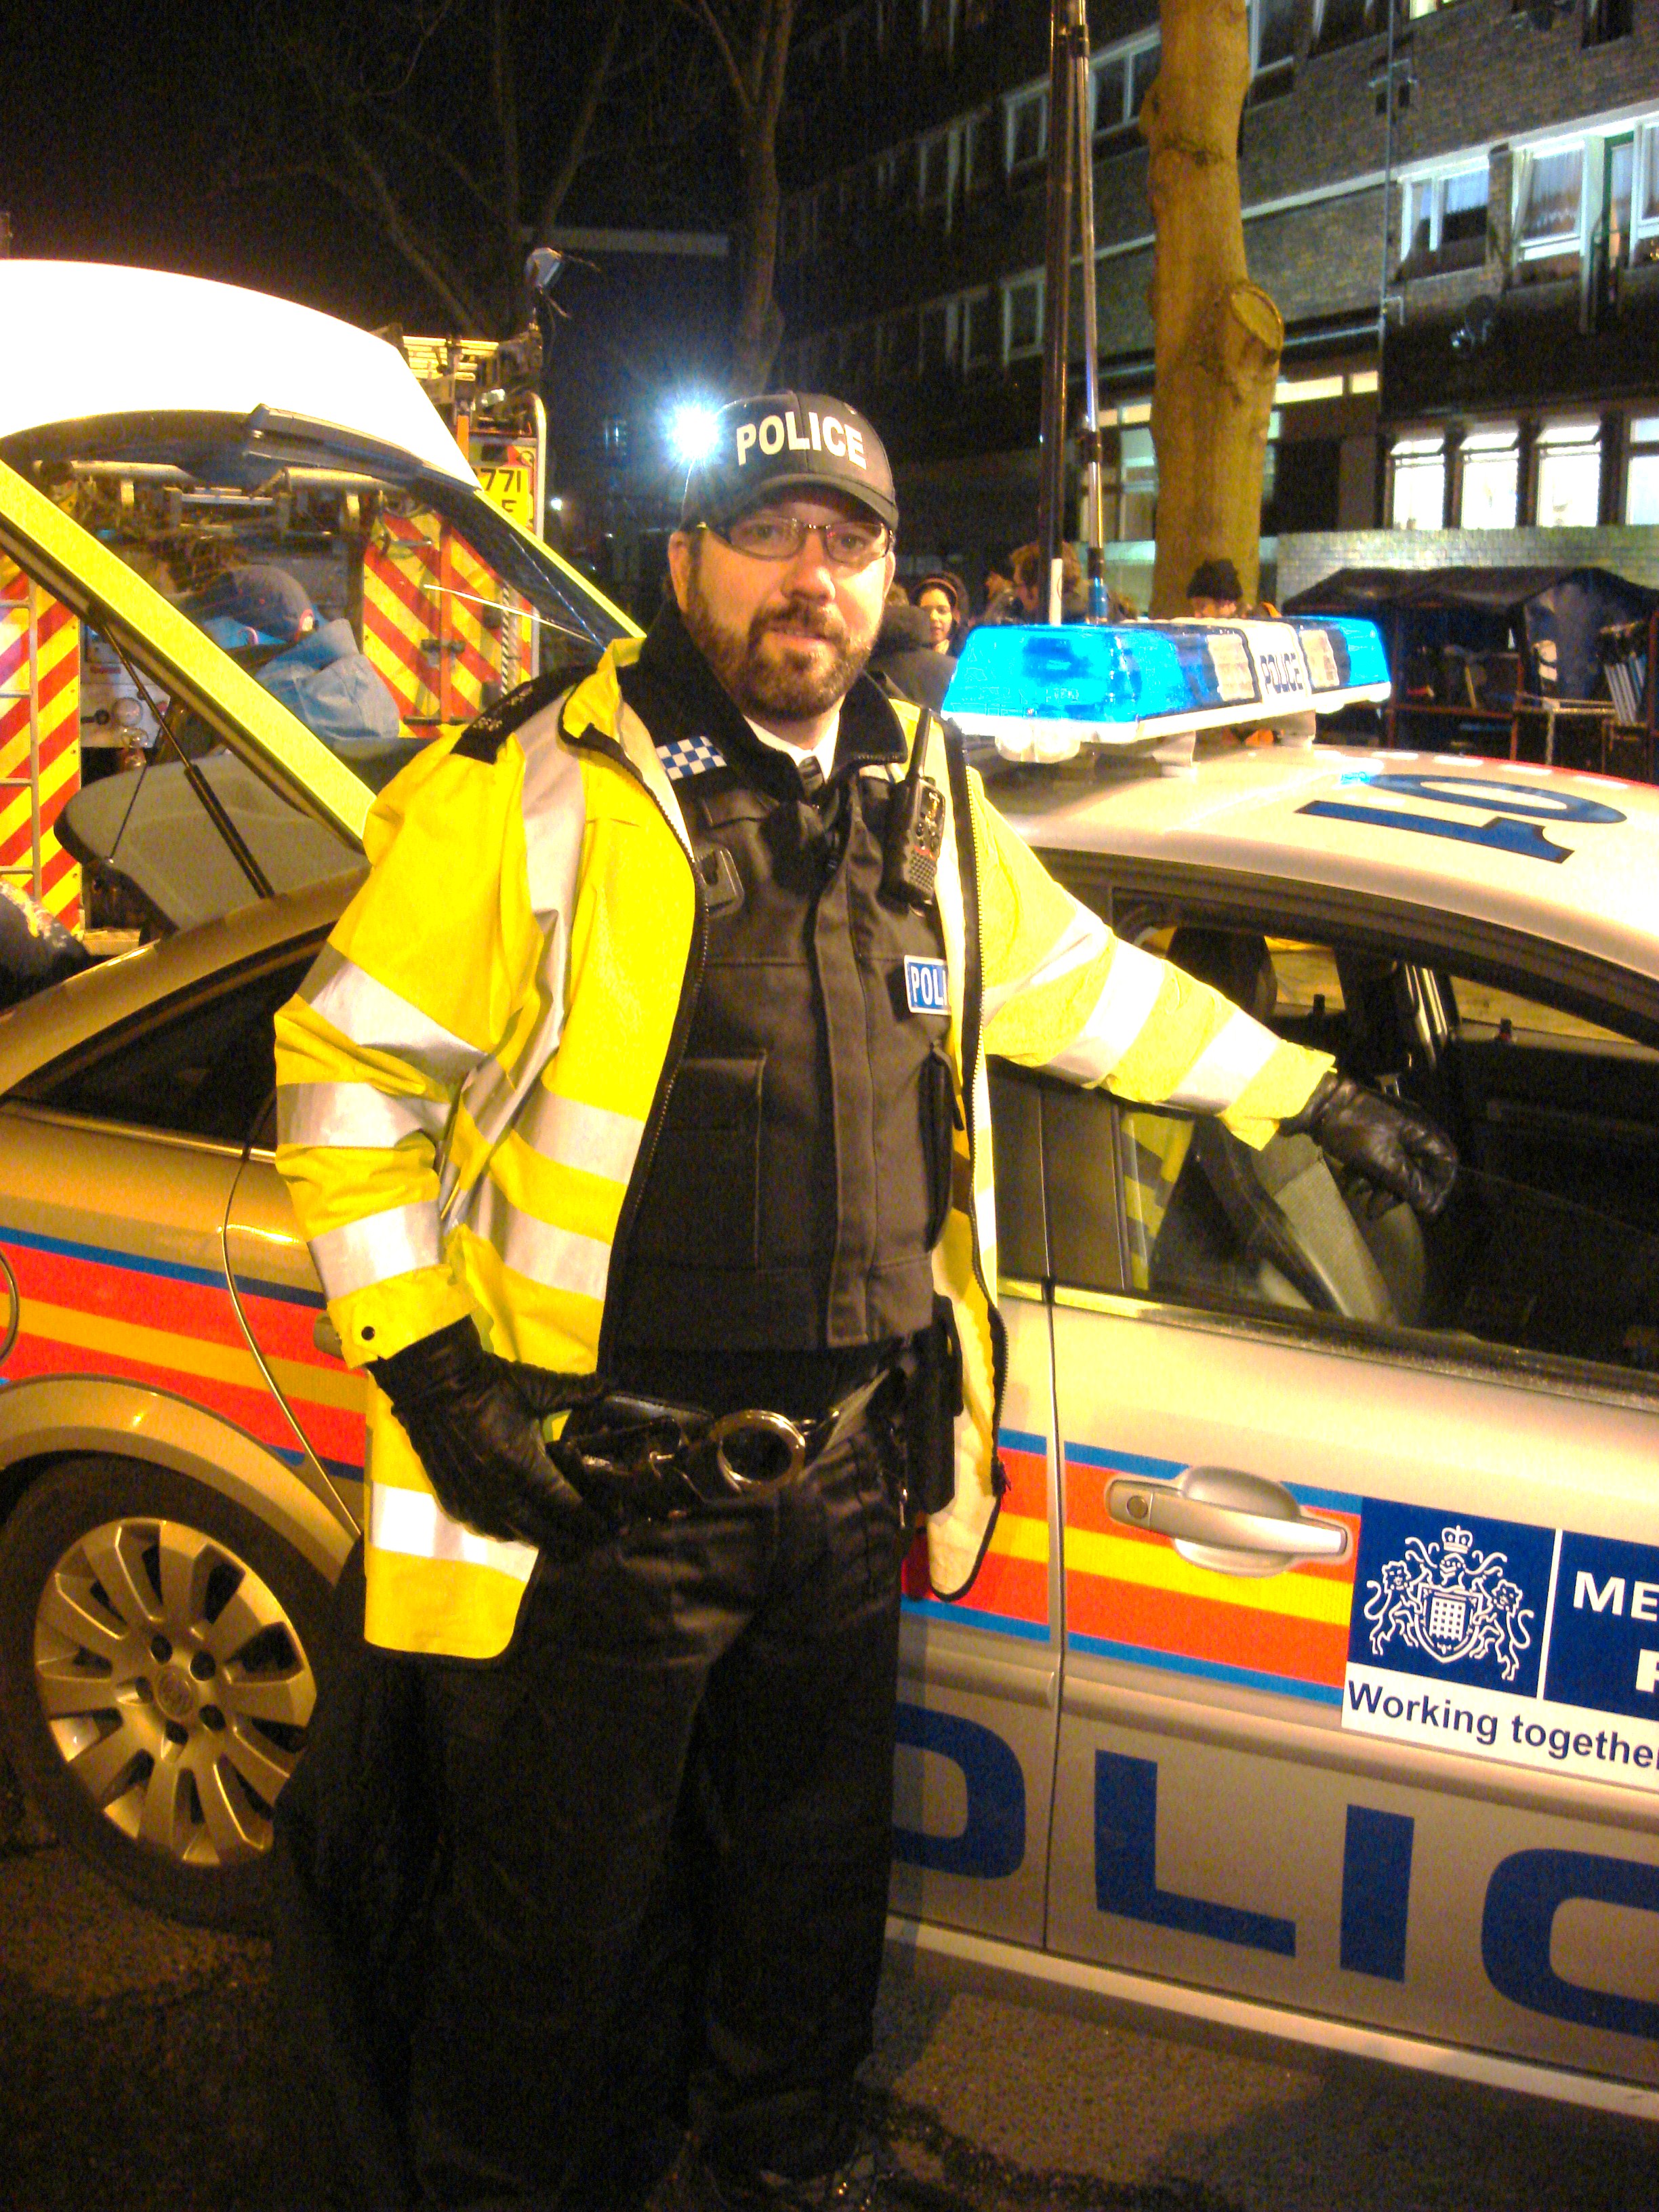 Policeman in the film Attacjk Tha Block